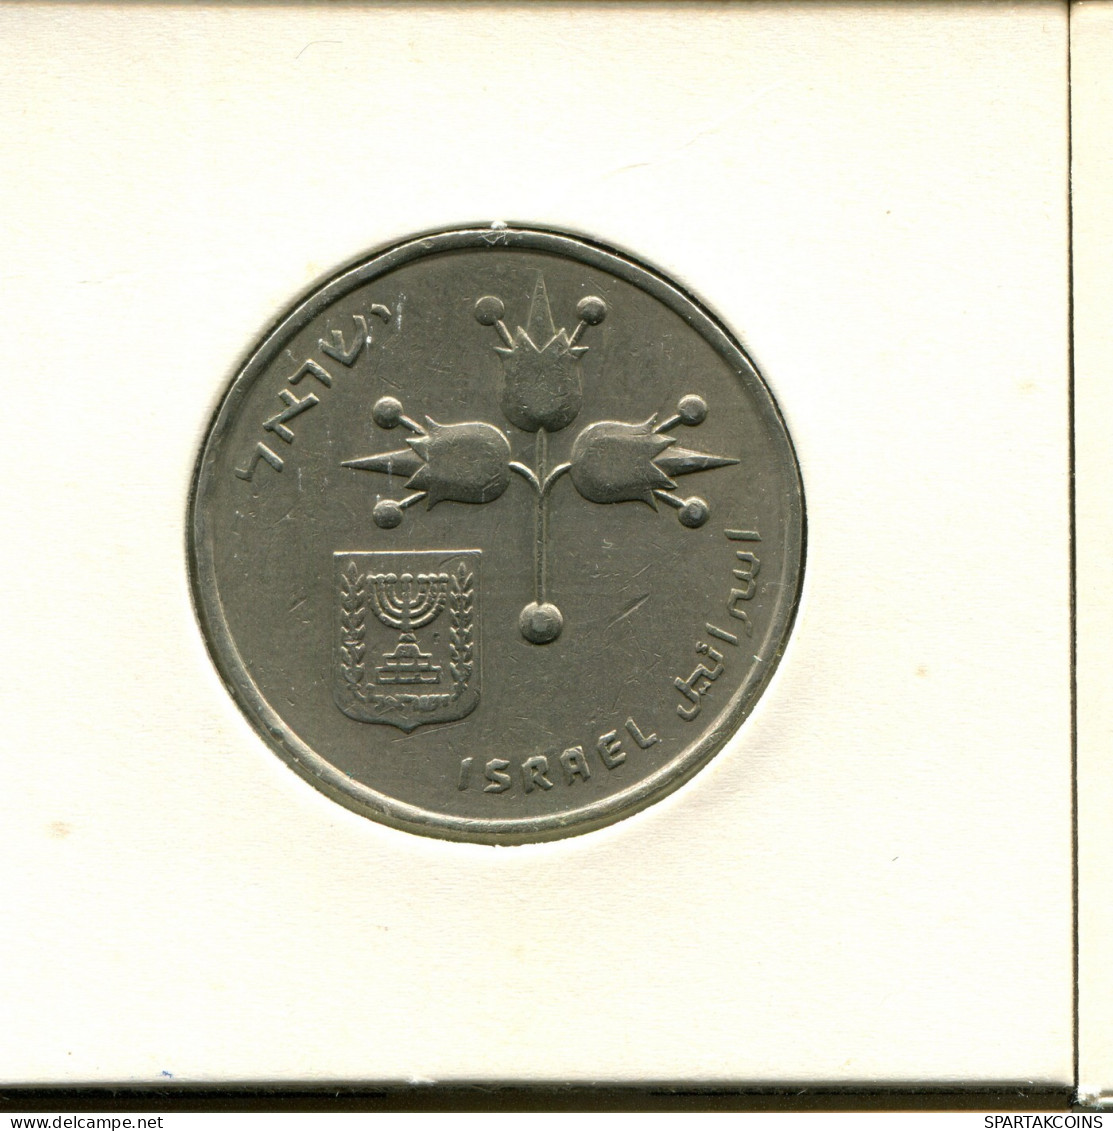 1 LIRA 1974 ISRAEL Moneda #AW724.E.A - Israël